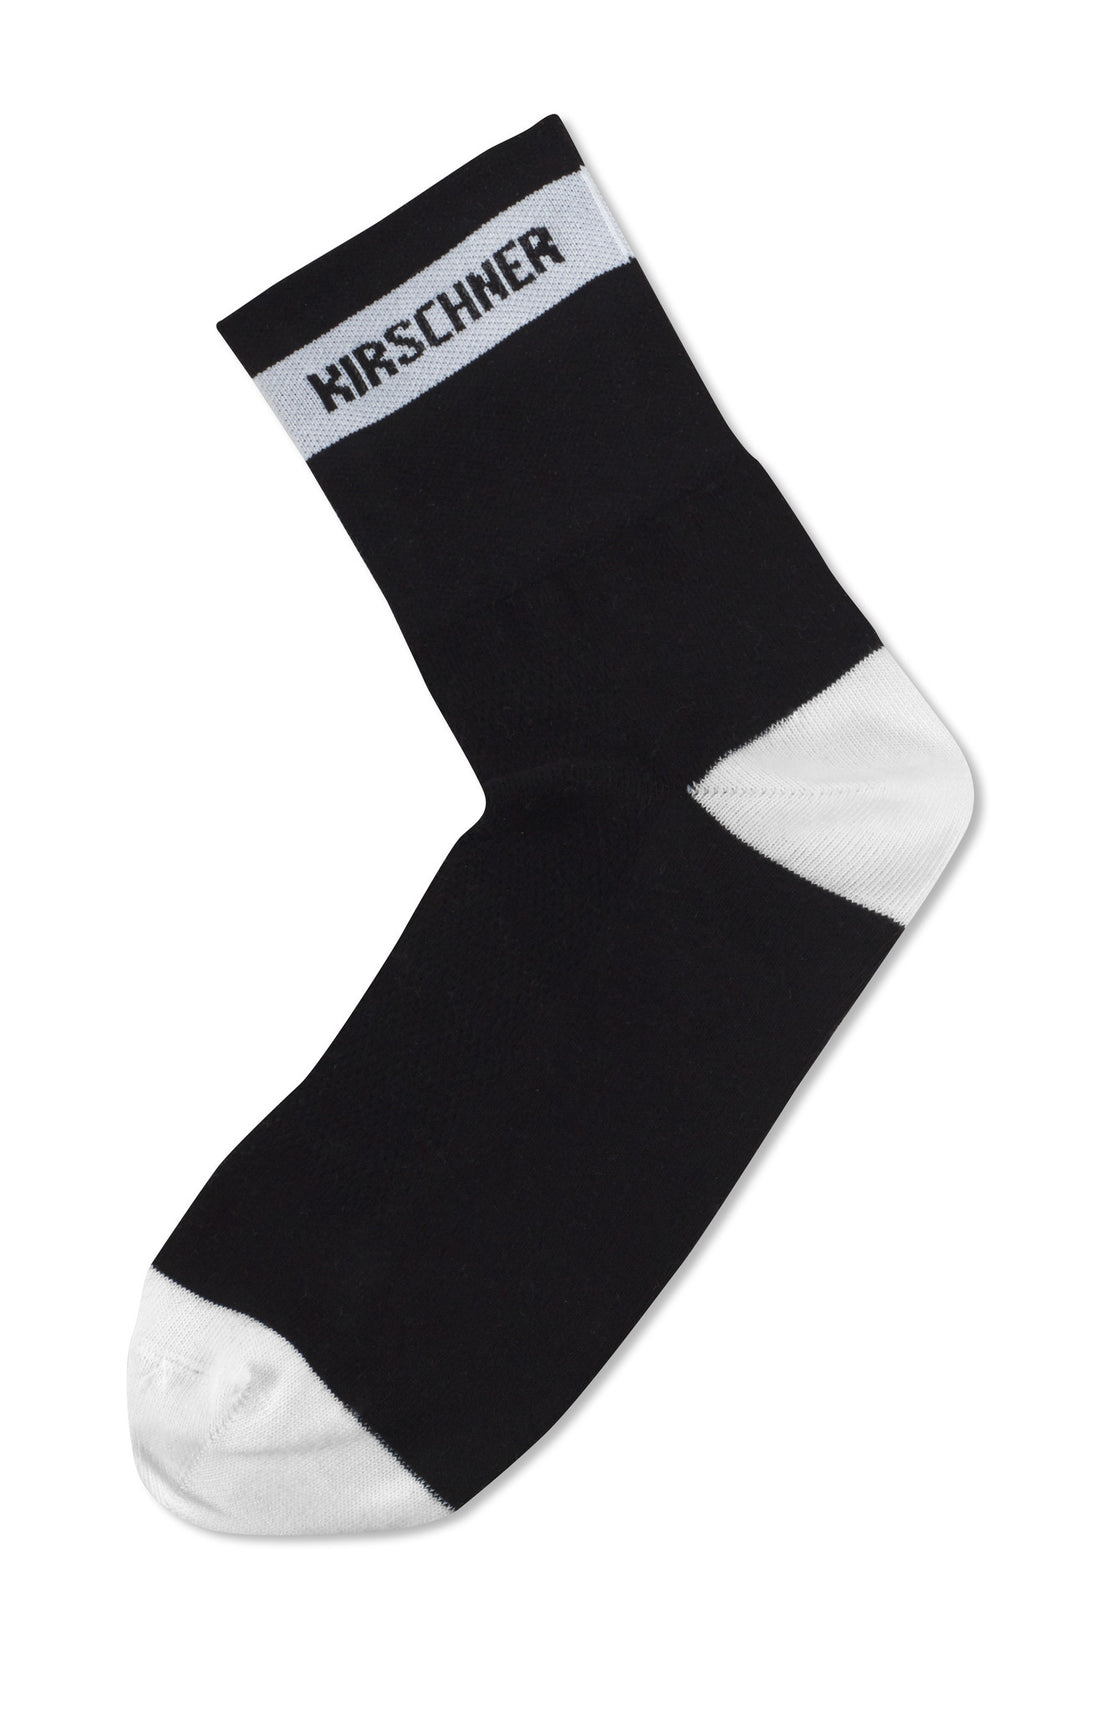 KIRSCHNER Black Label Socks